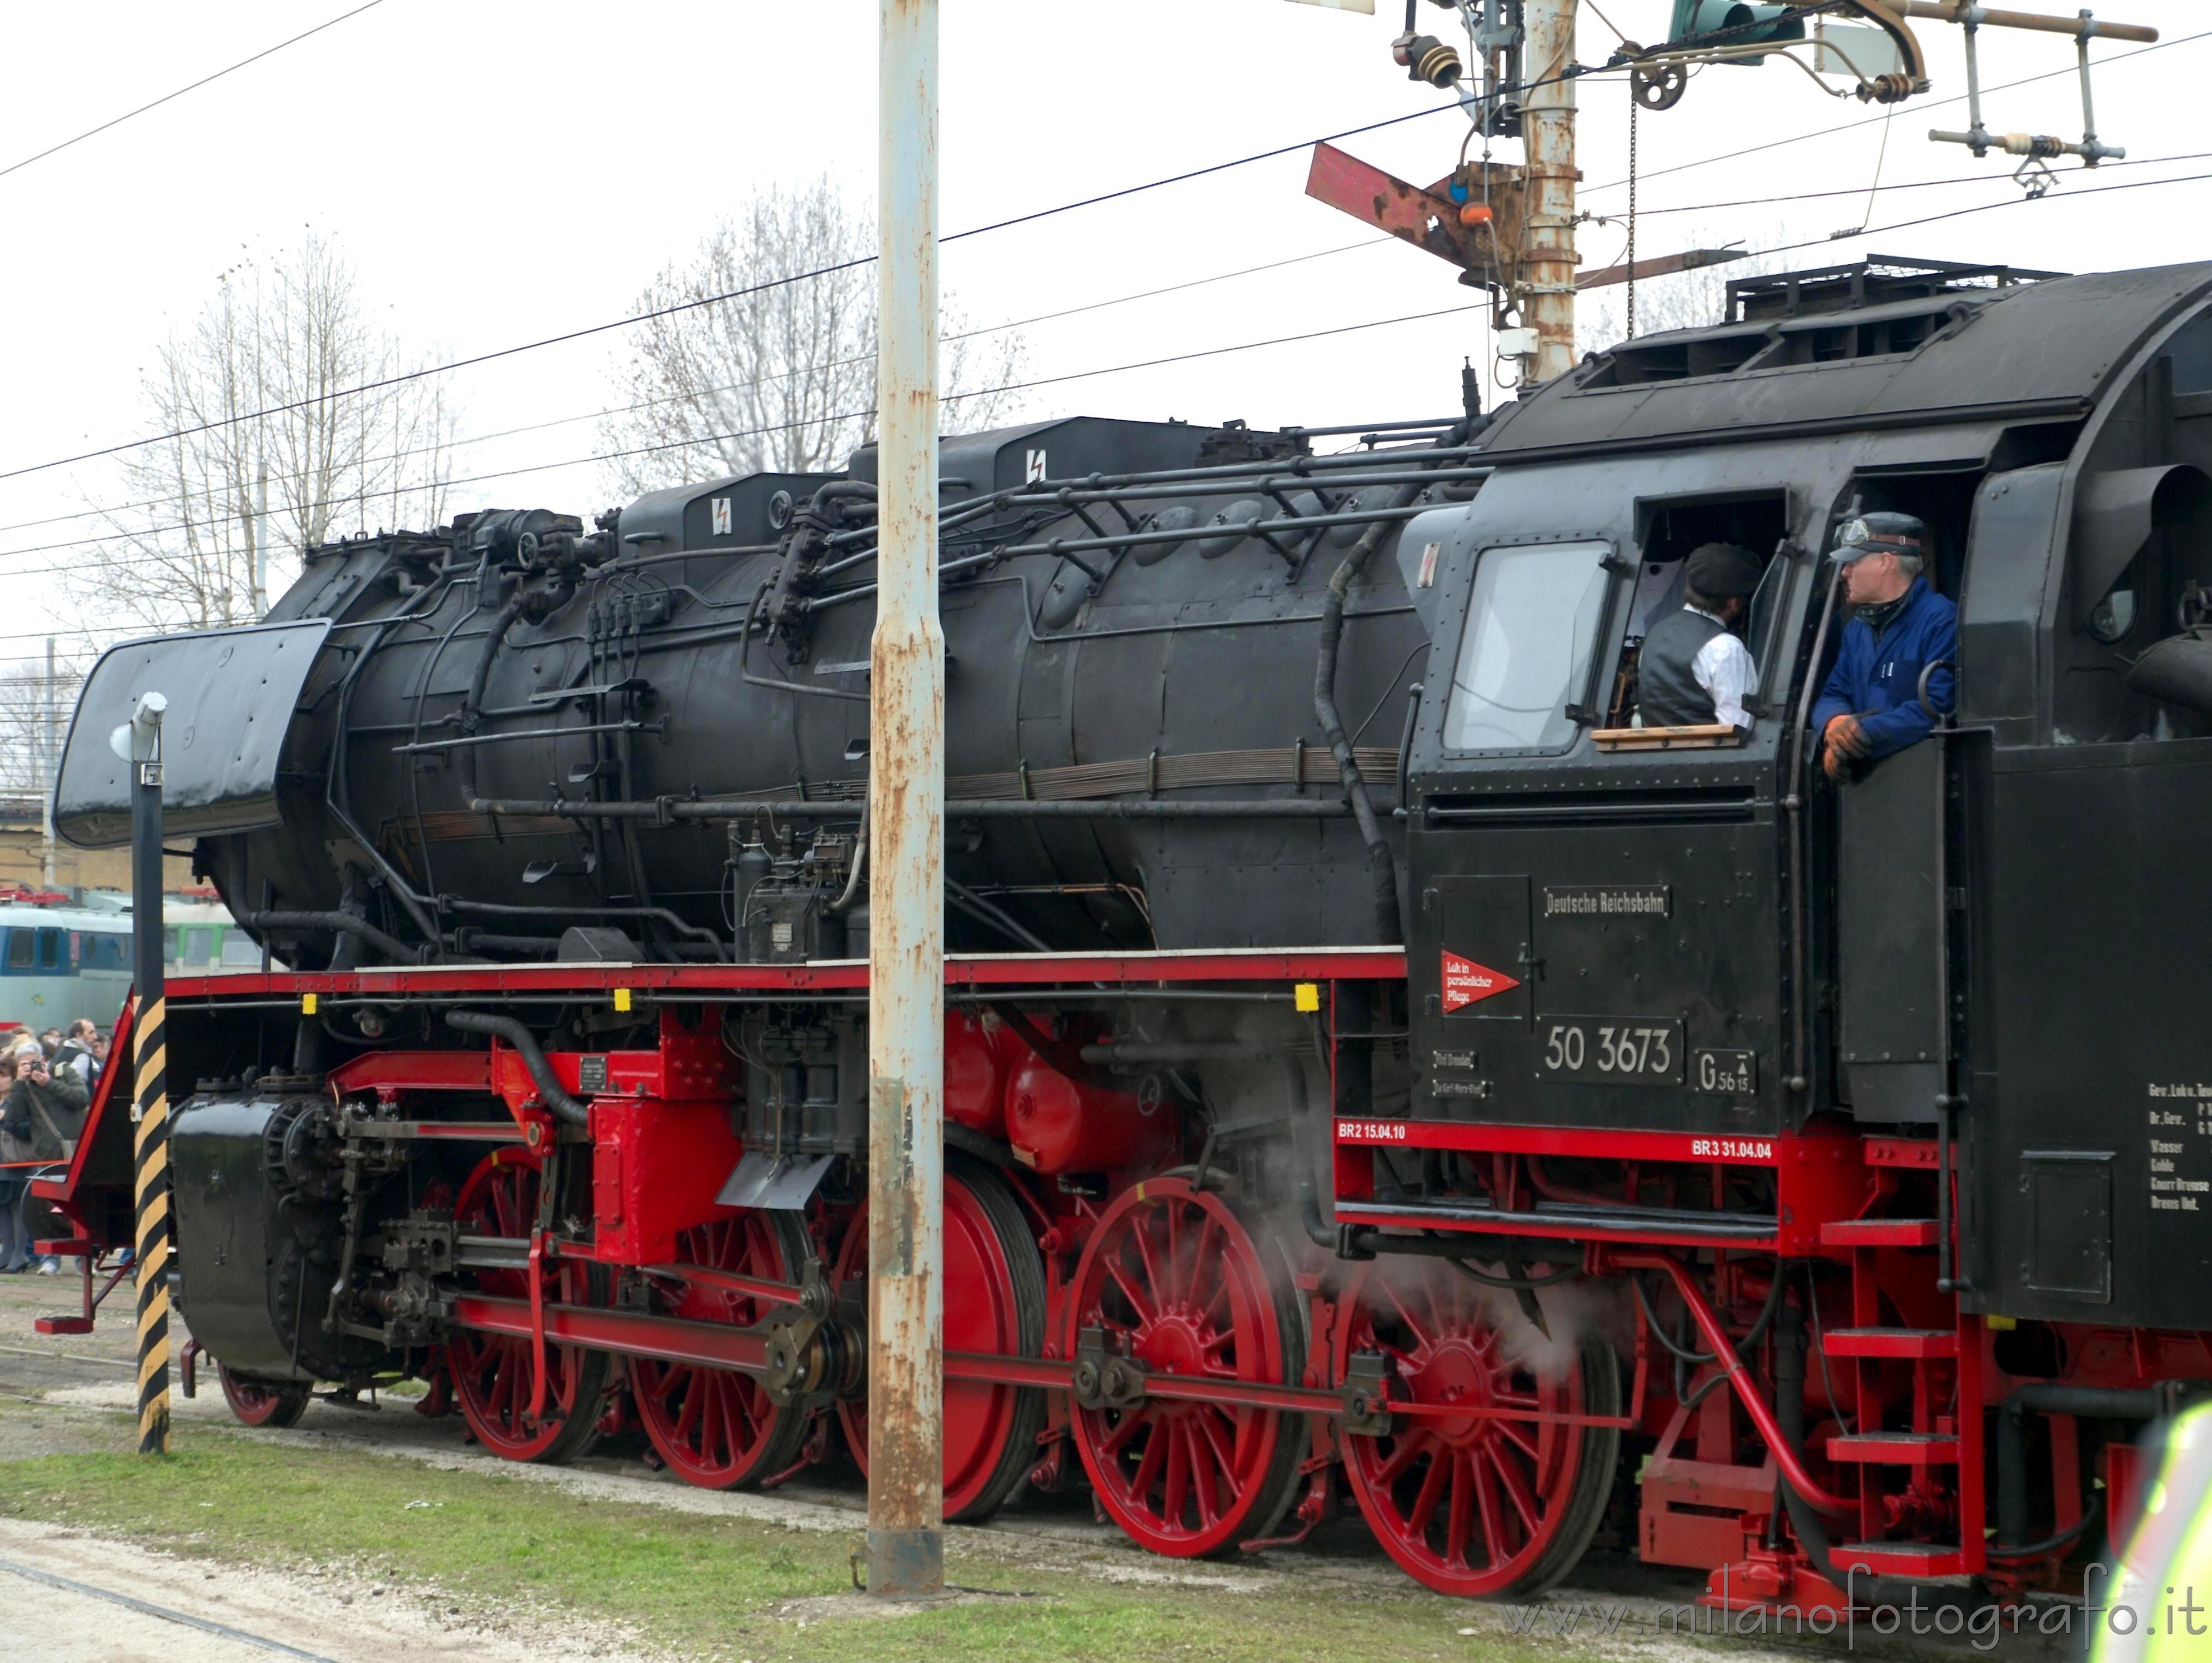 Milano: Grossa locomotiva a vapore - Milano